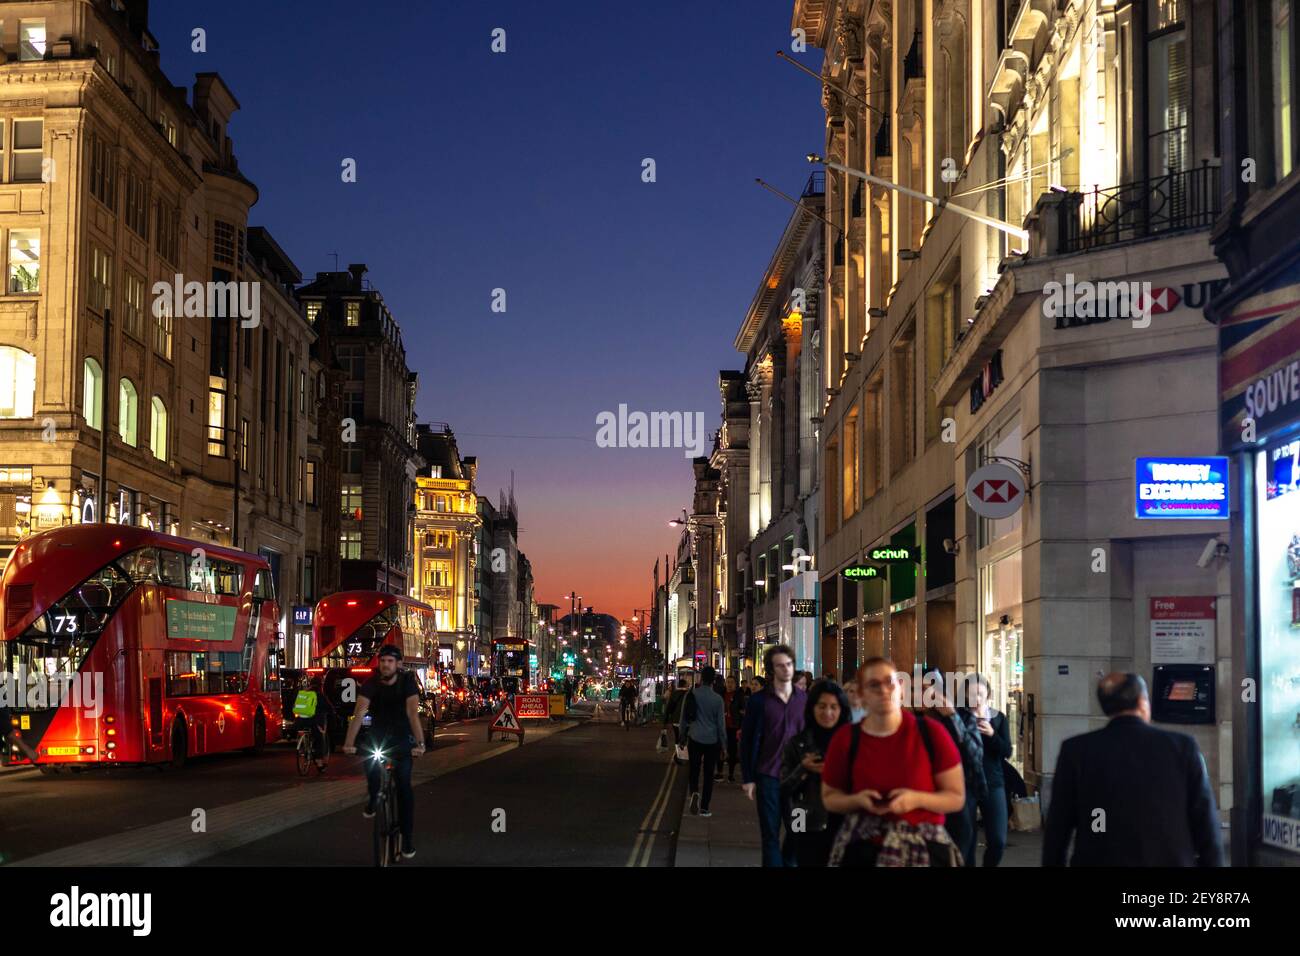 Oxford Street scene, Central London, England, UK. Stock Photo